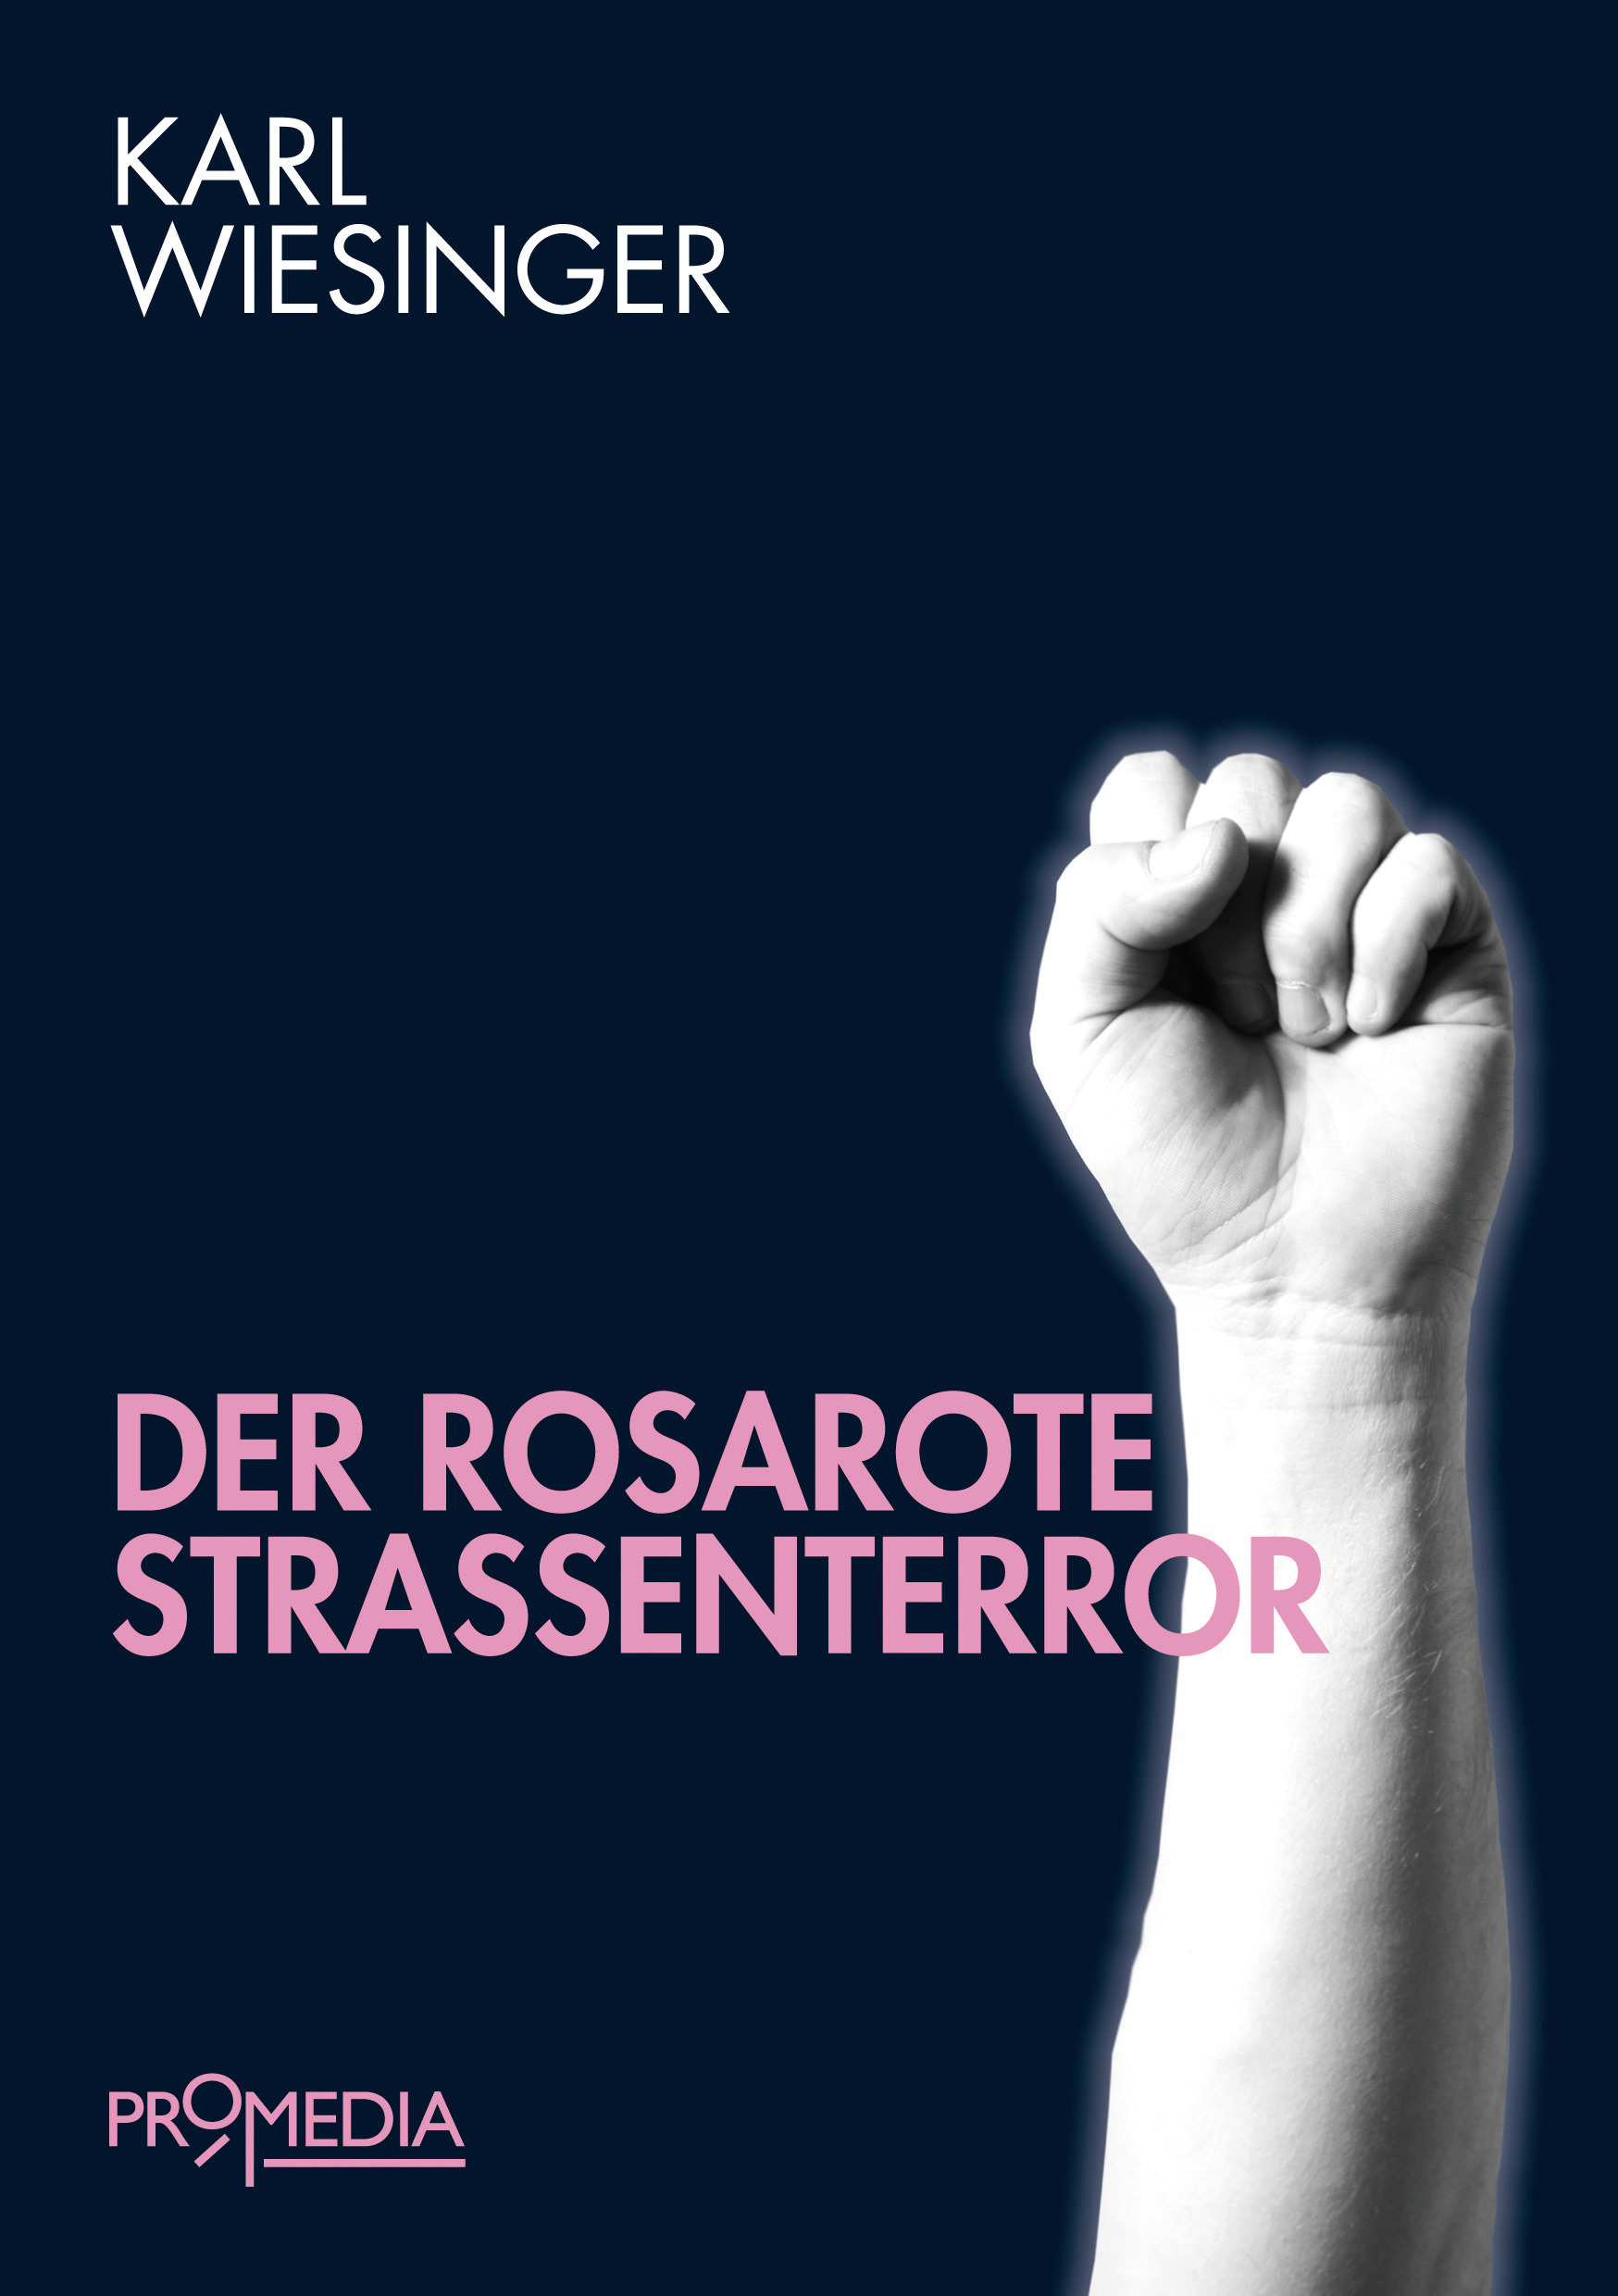 [Cover] Der rosarote Straßenterror